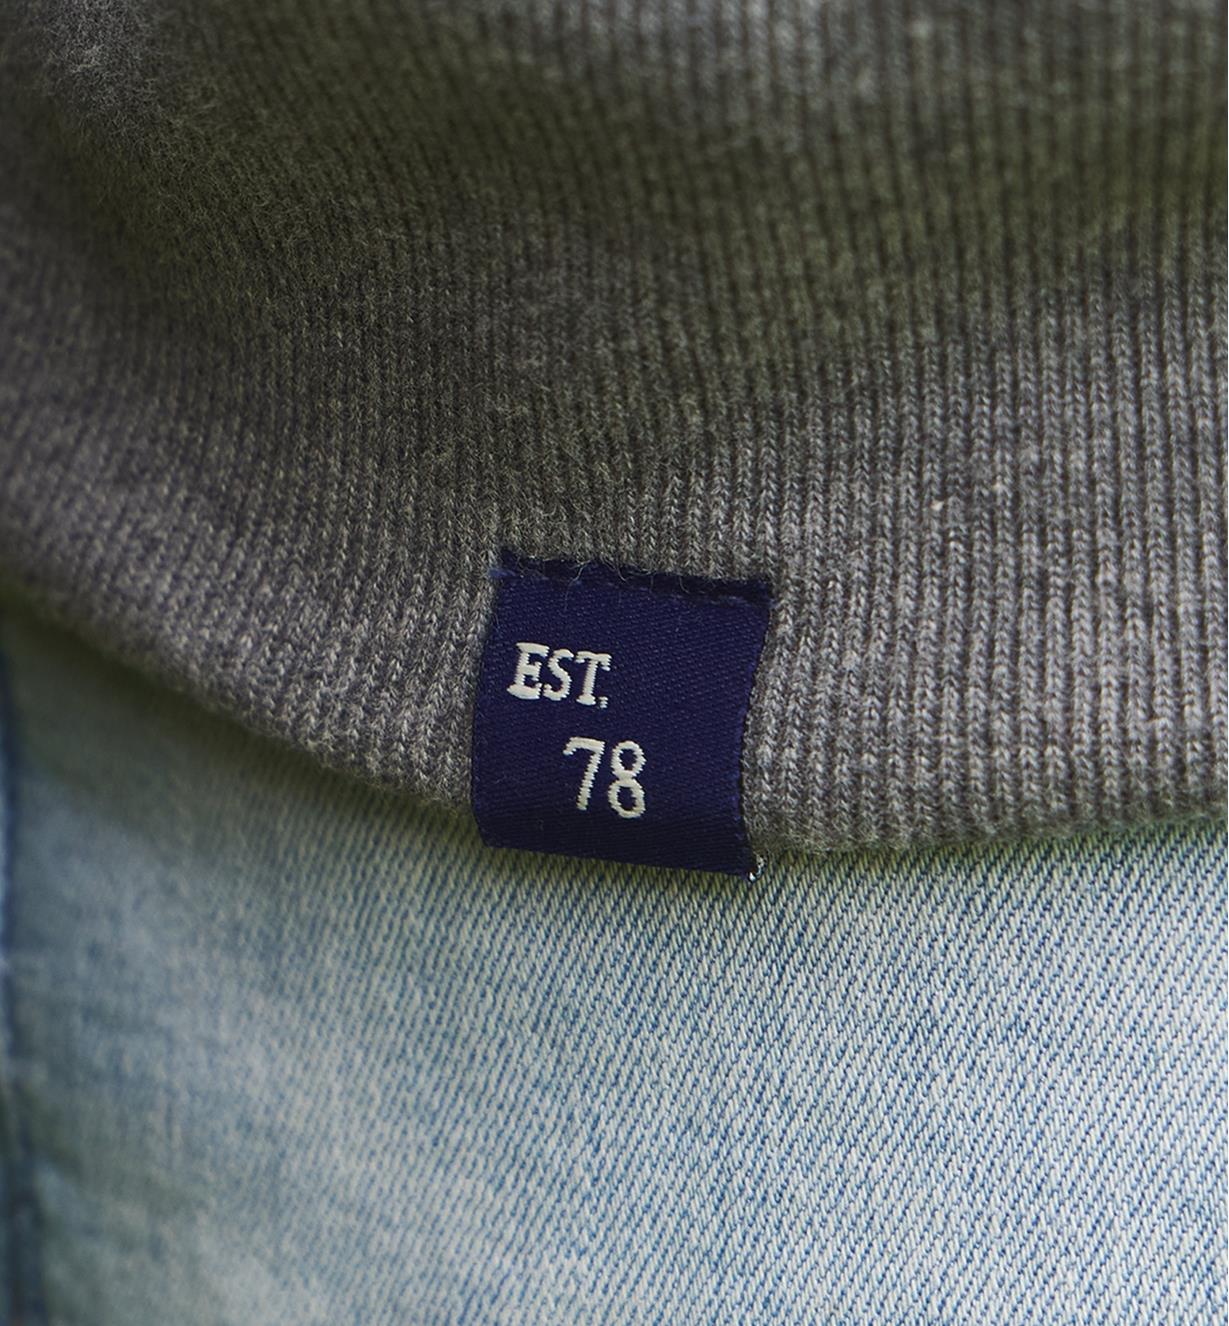 Close-up of Est 78 tag sewn onto bottom of sweatshirt